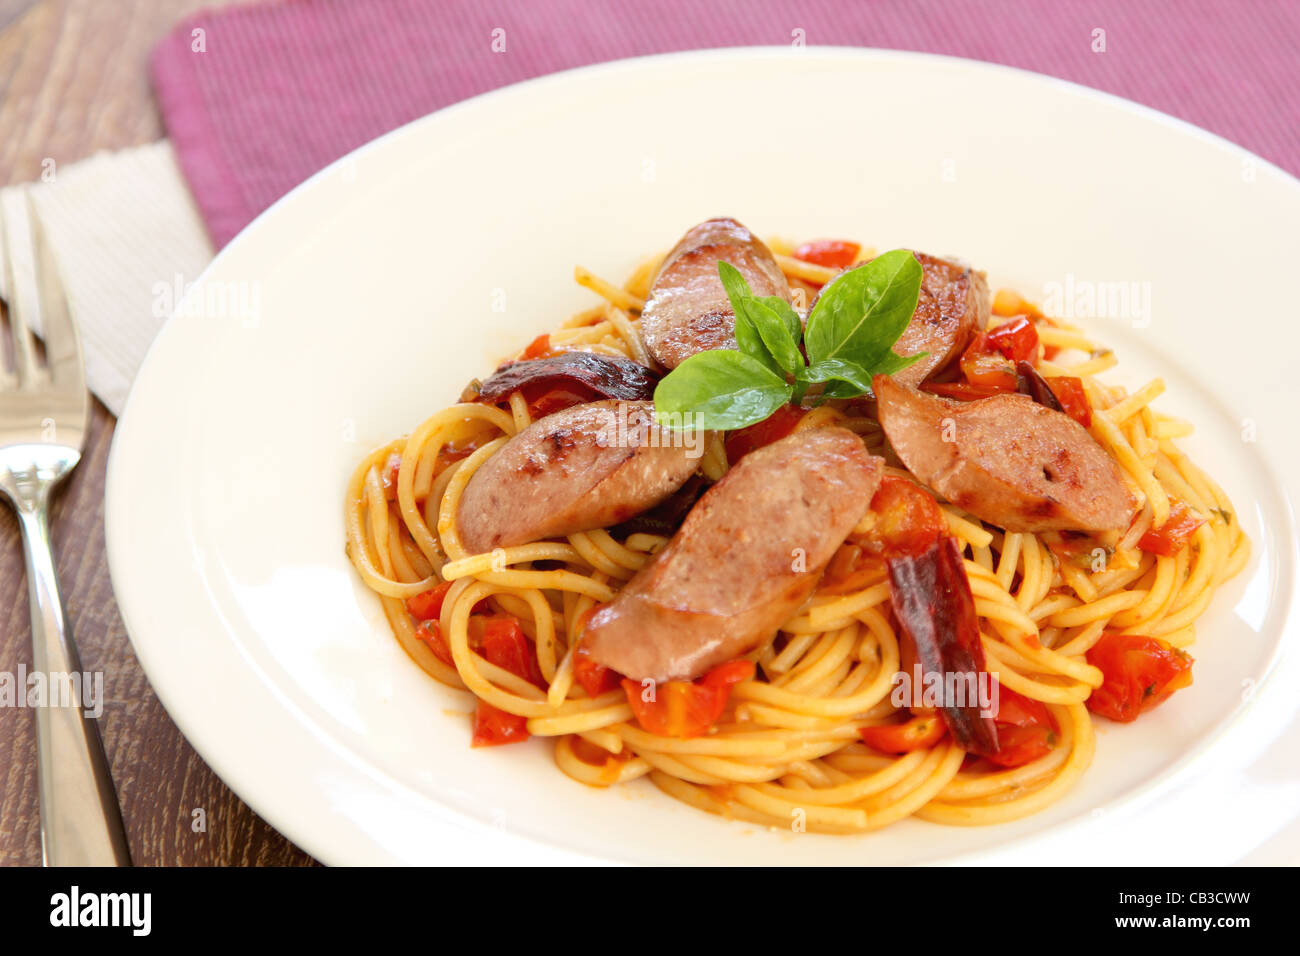 Pasta with sausage and tomato Stock Photo